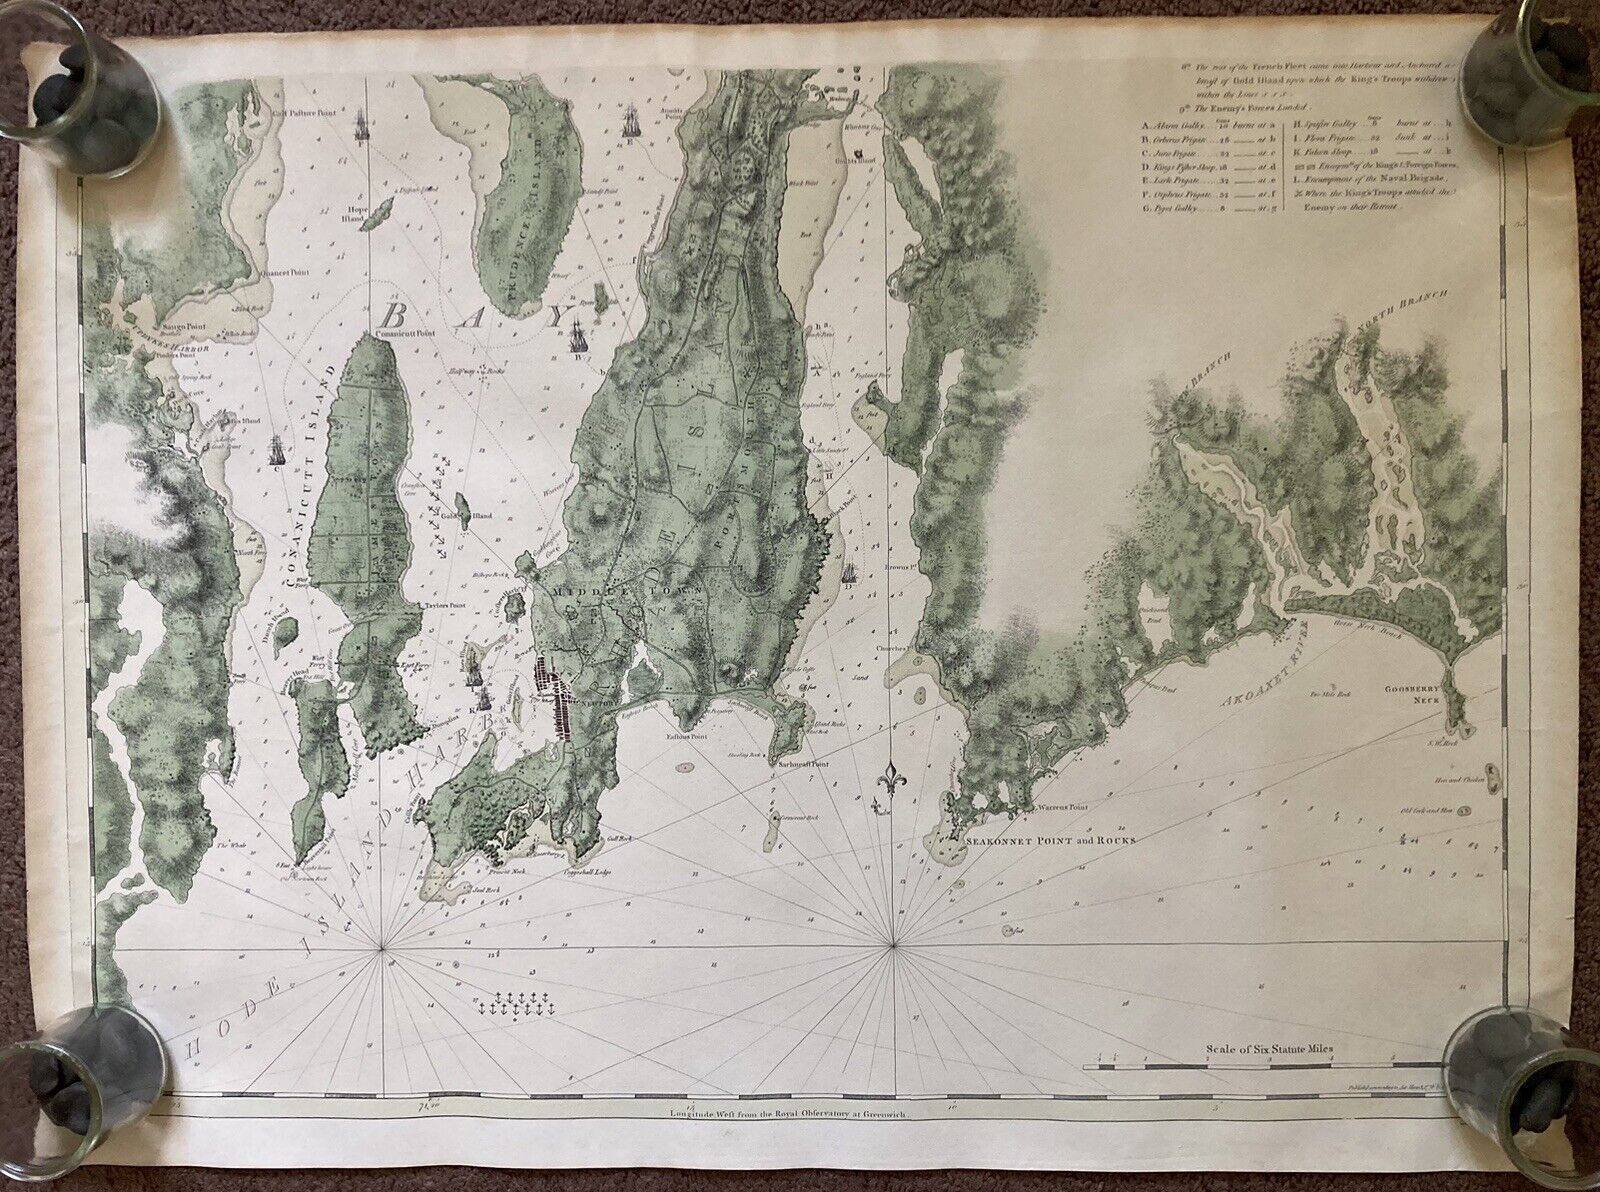 1966 Barre Publishing Map Of Rhode Island Harbor And Narragansett Bay